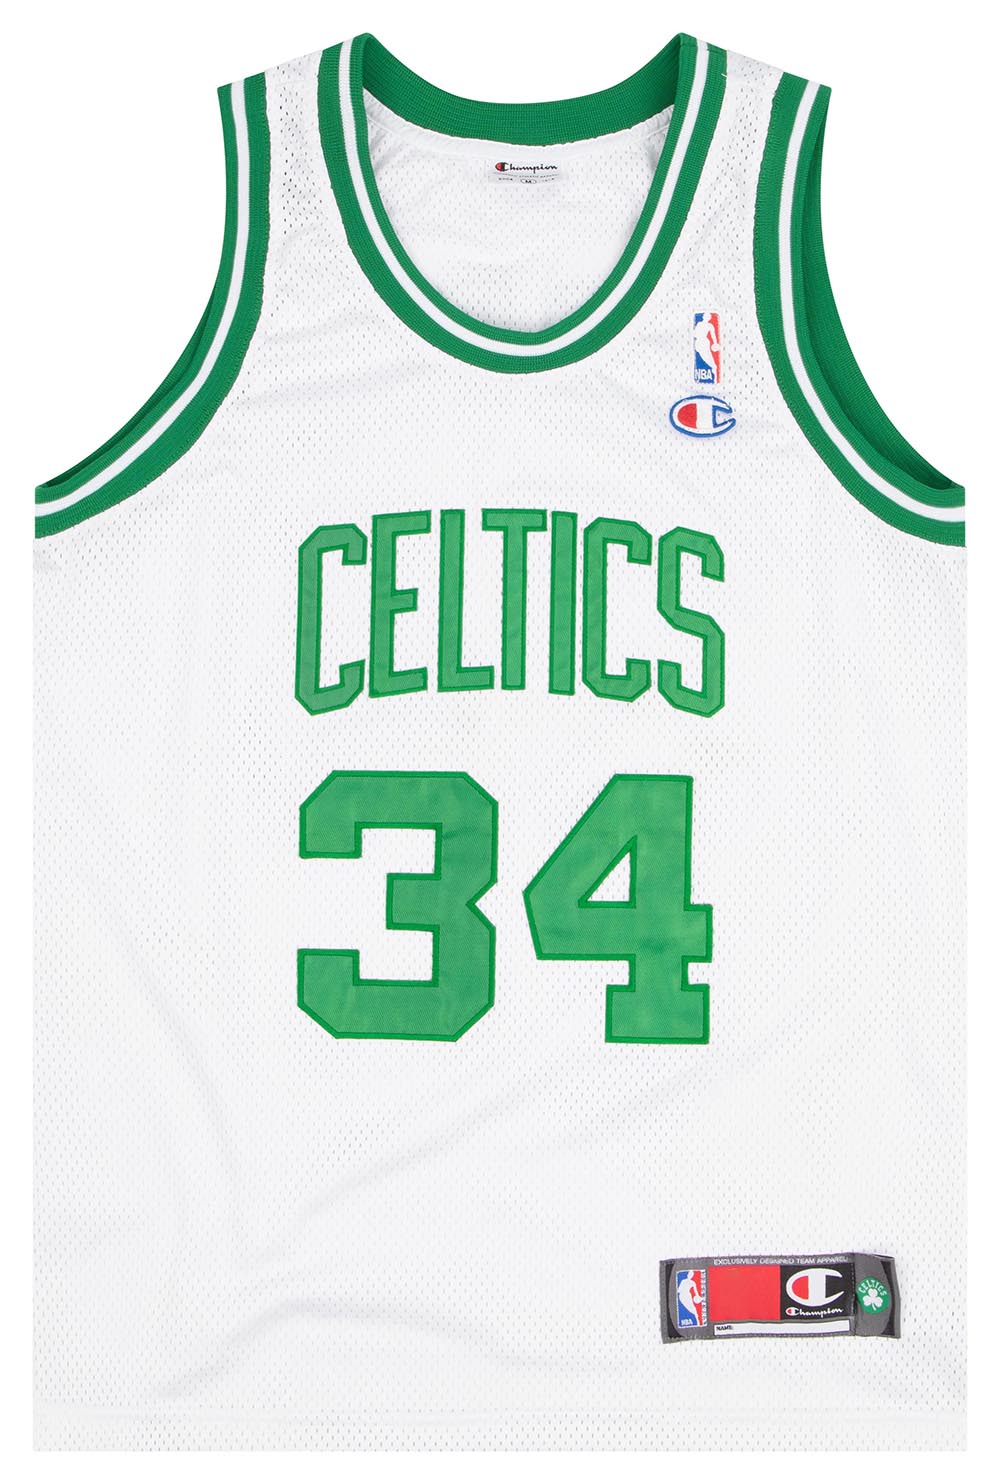 Boston Celtics Paul Pierce Champion Vintage Jersey NBA Basketball Shirt  size XL